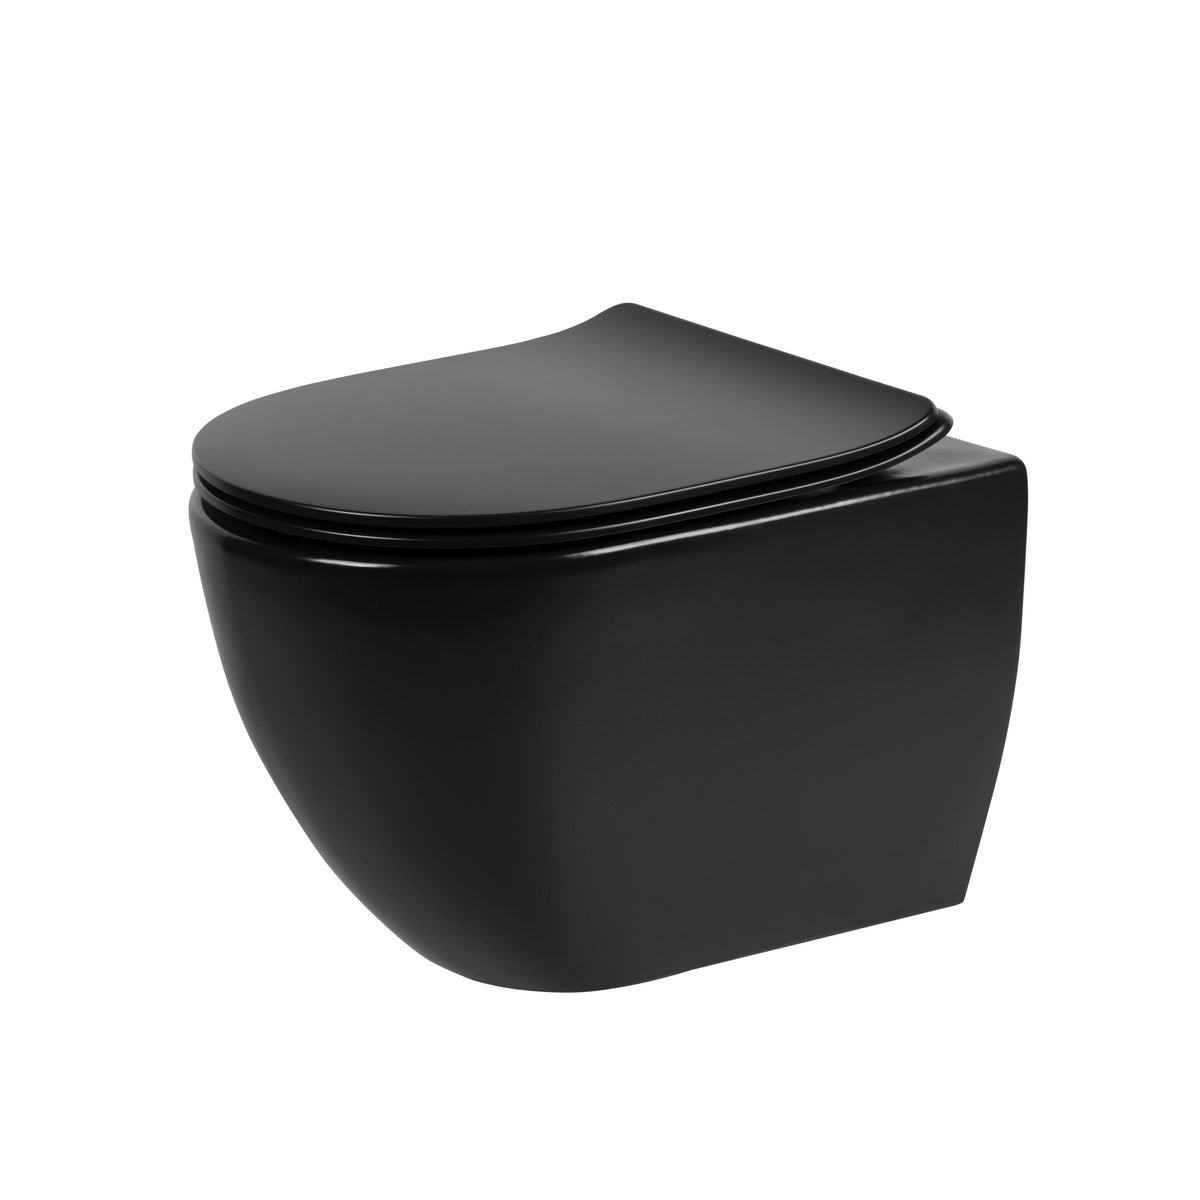 Aquavive hangtoilet Mazaro mat zwart | Soft-close toiletzitting | Randloos toiletpot